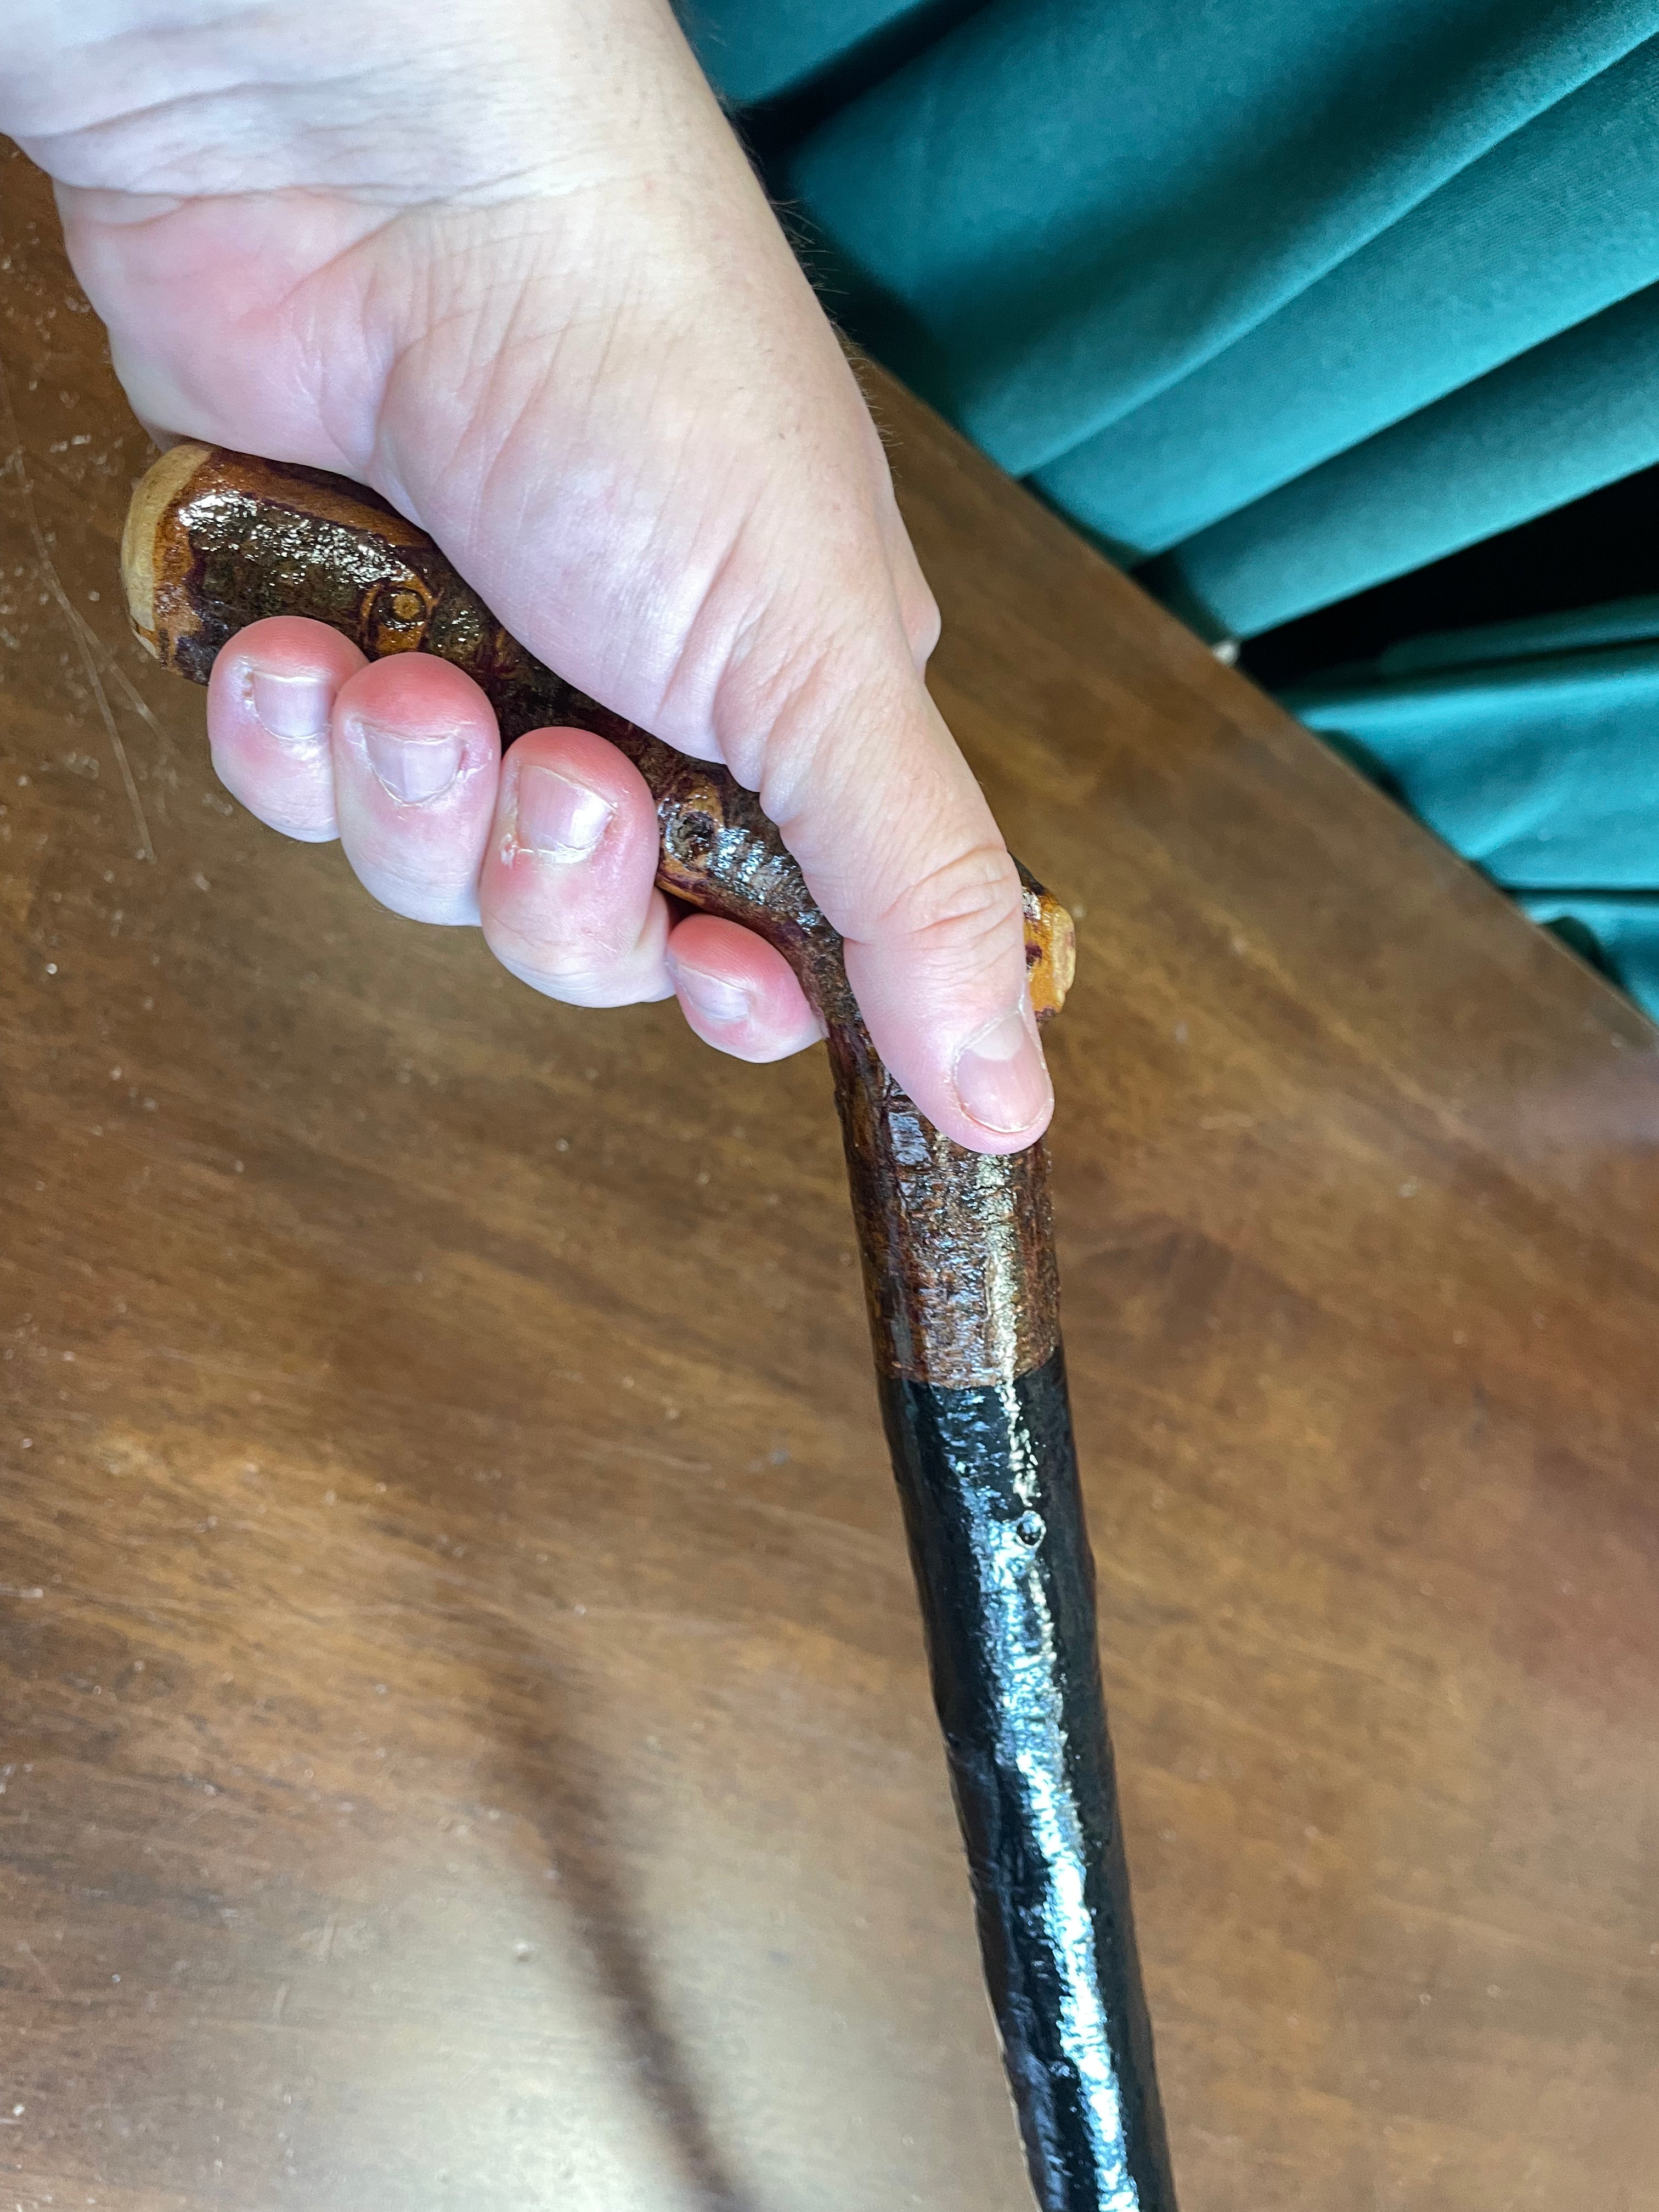 Blackthorn Walking Stick 37 1/2 inch - Handmade in Ireland